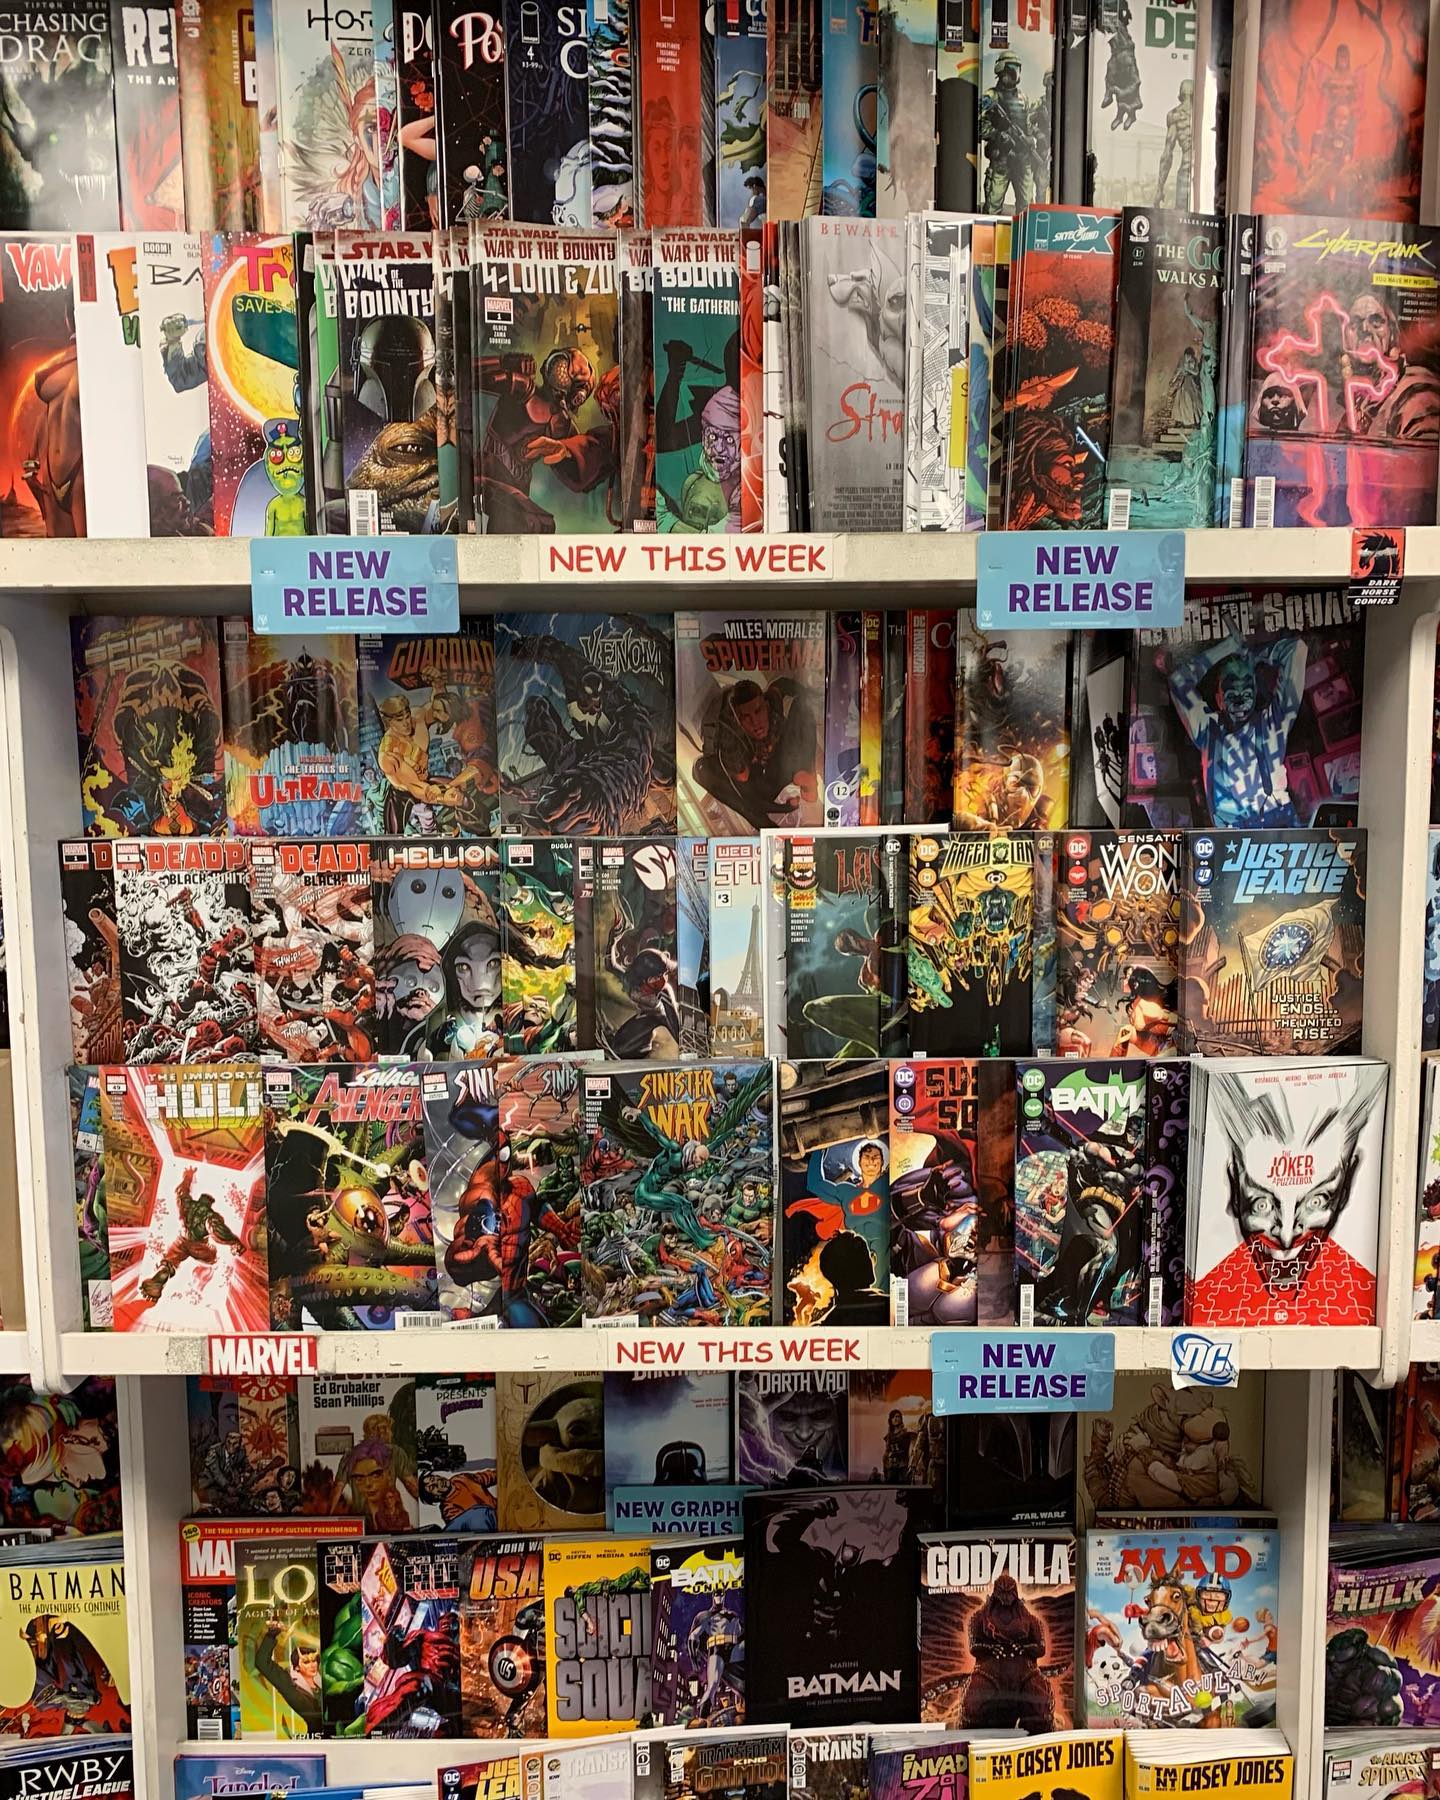 Tony's Kingdom of Comics and Collectibles